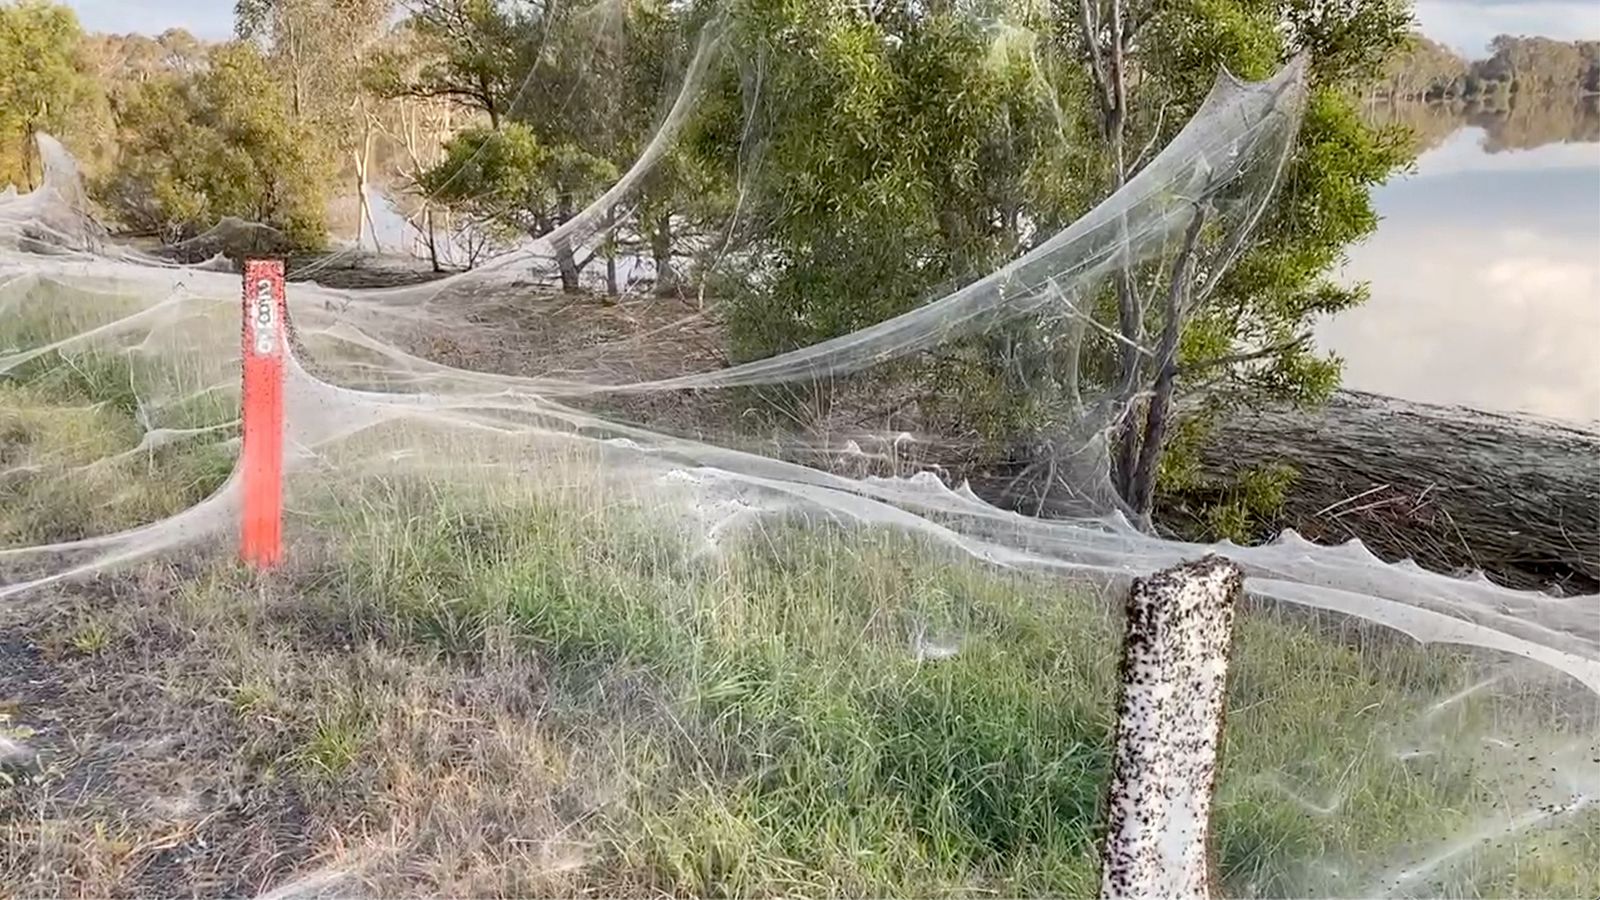 WATCH: Thousands of spiders take refuge in Australia after devastating  floods